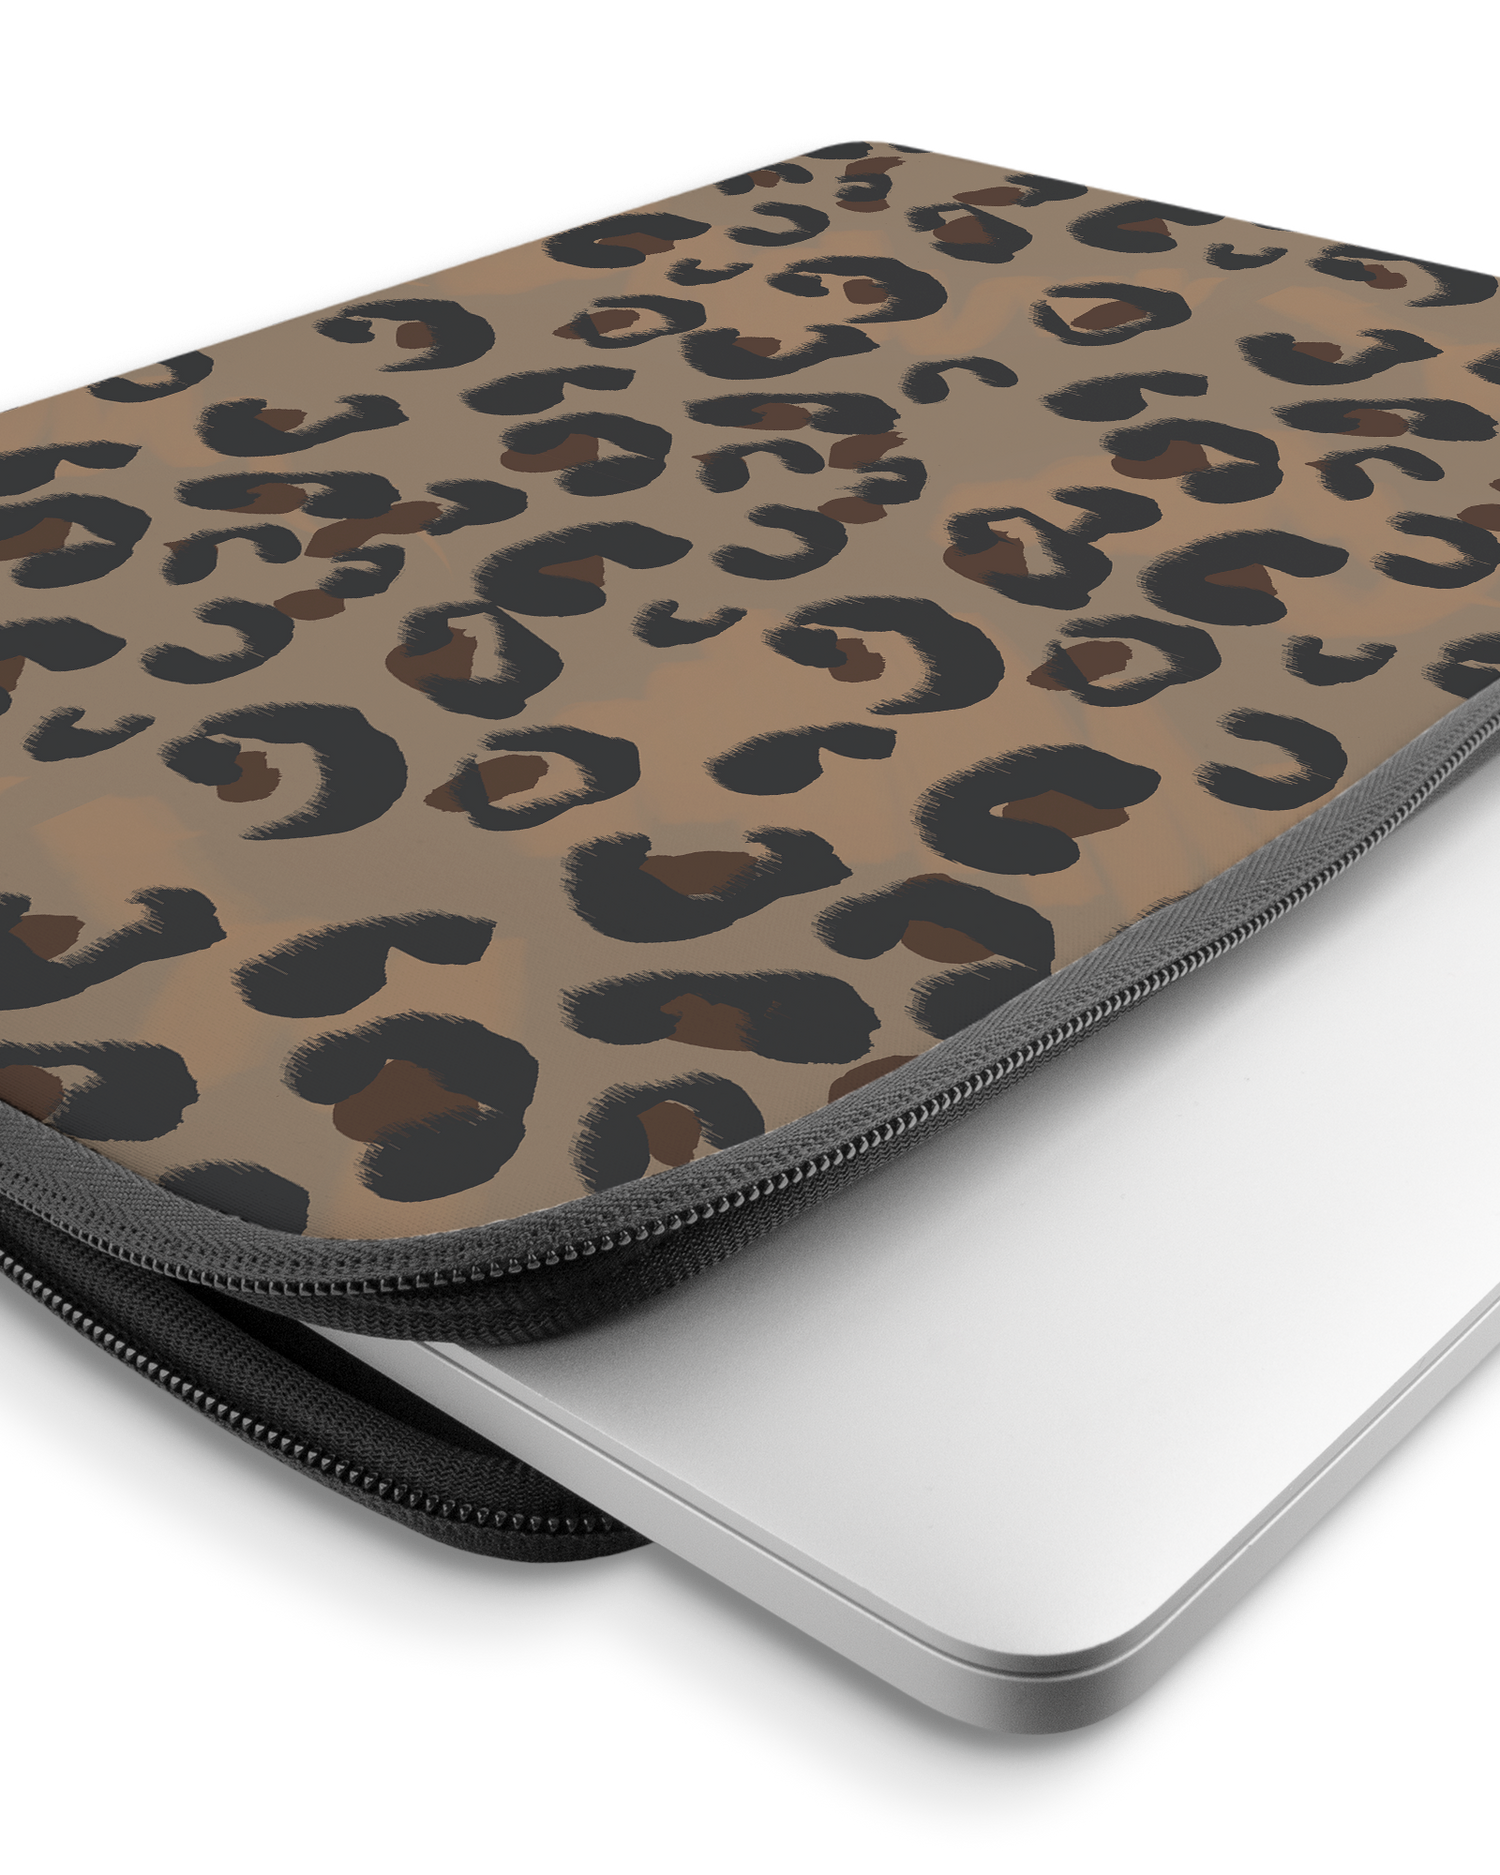 Leopard Repeat Laptophülle 15-16 Zoll mit Gerät im Inneren